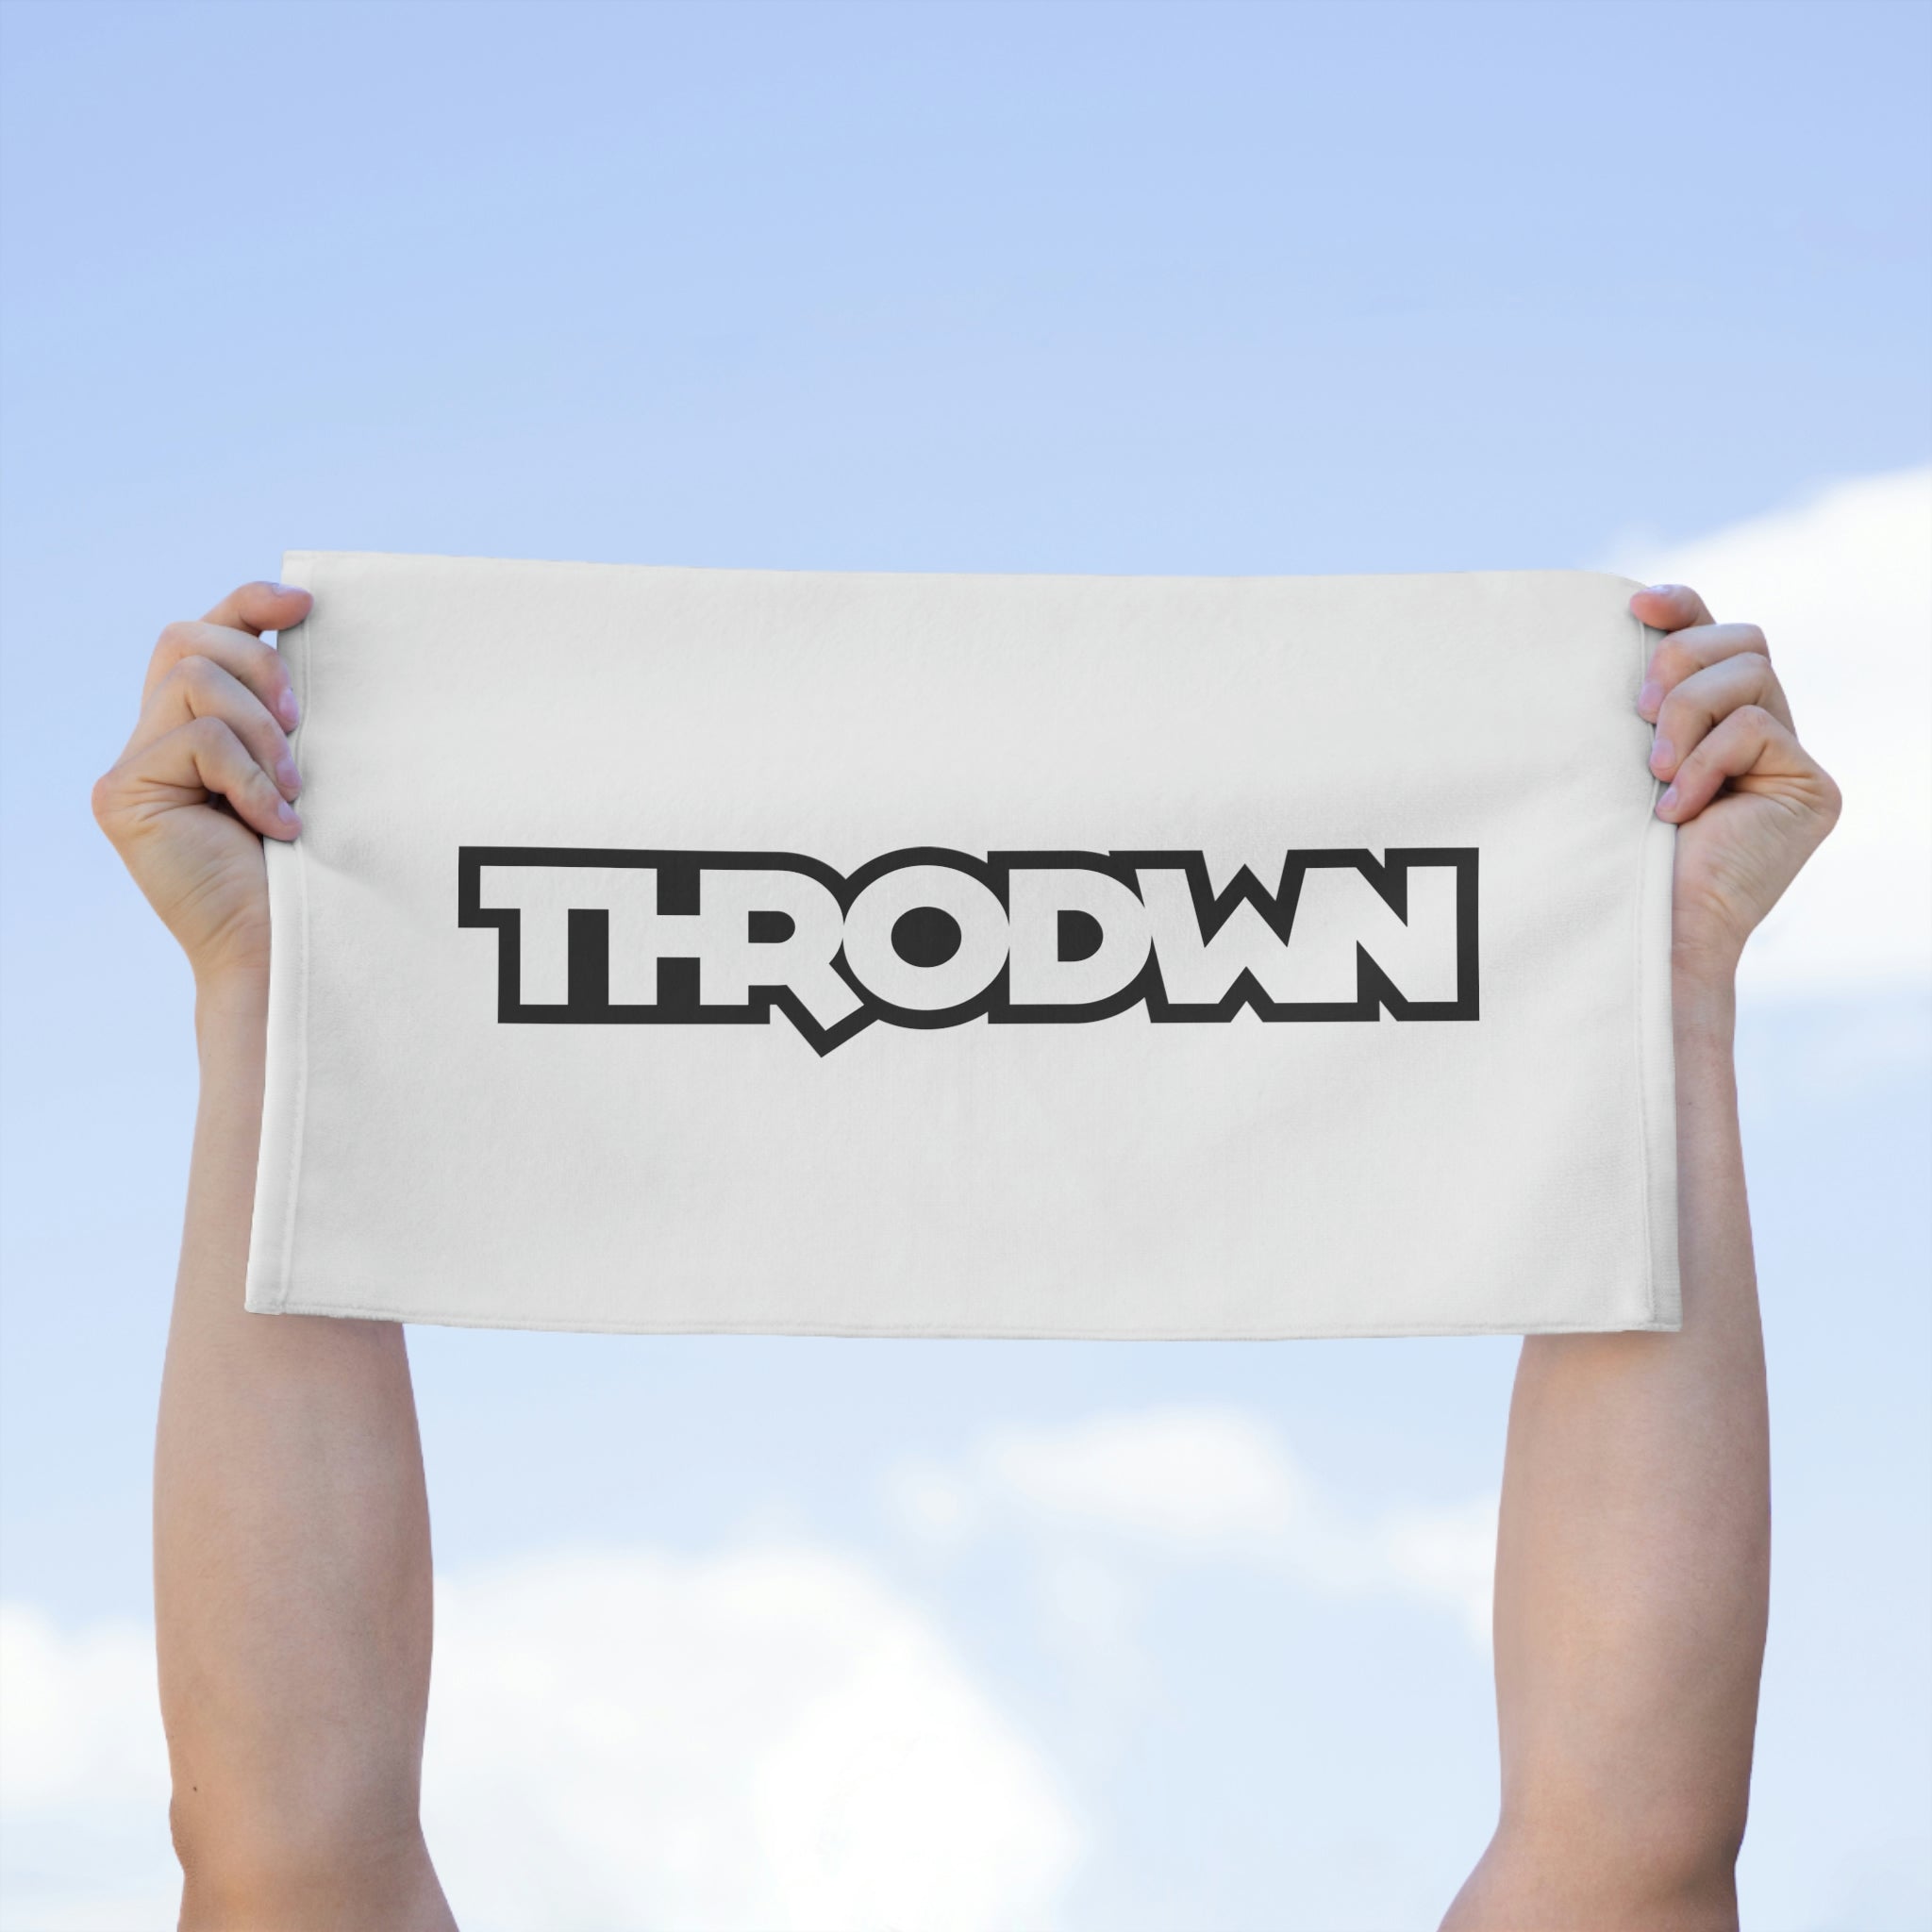 Throdwn Rally Towel, 11x18